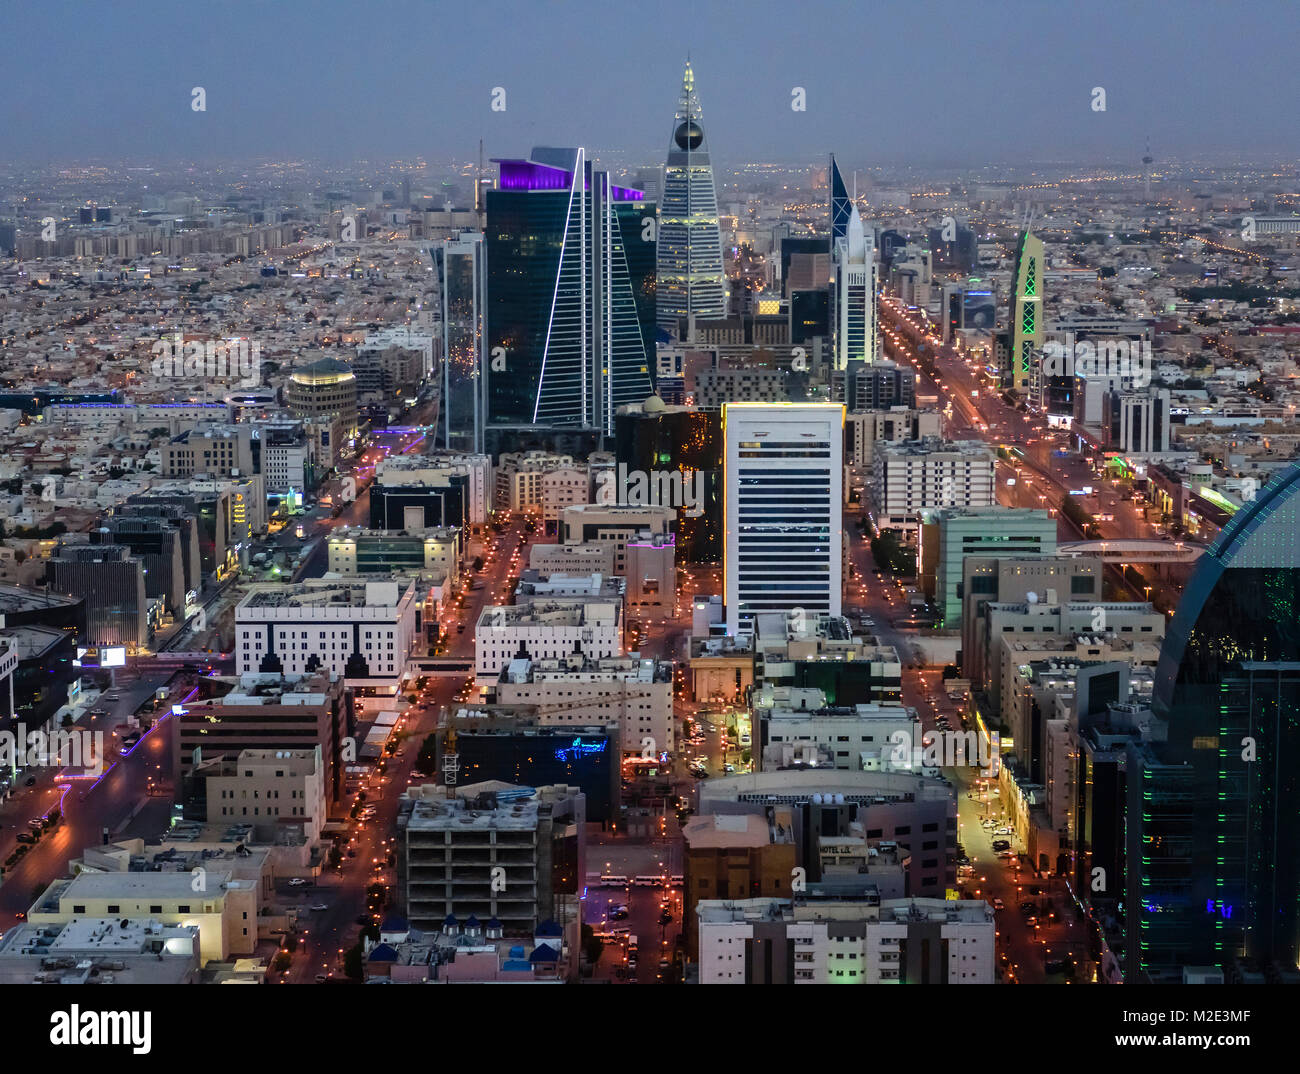 'Aerial view of cityscape at night, Riyadh, Saudi Arabia' Stock Photo